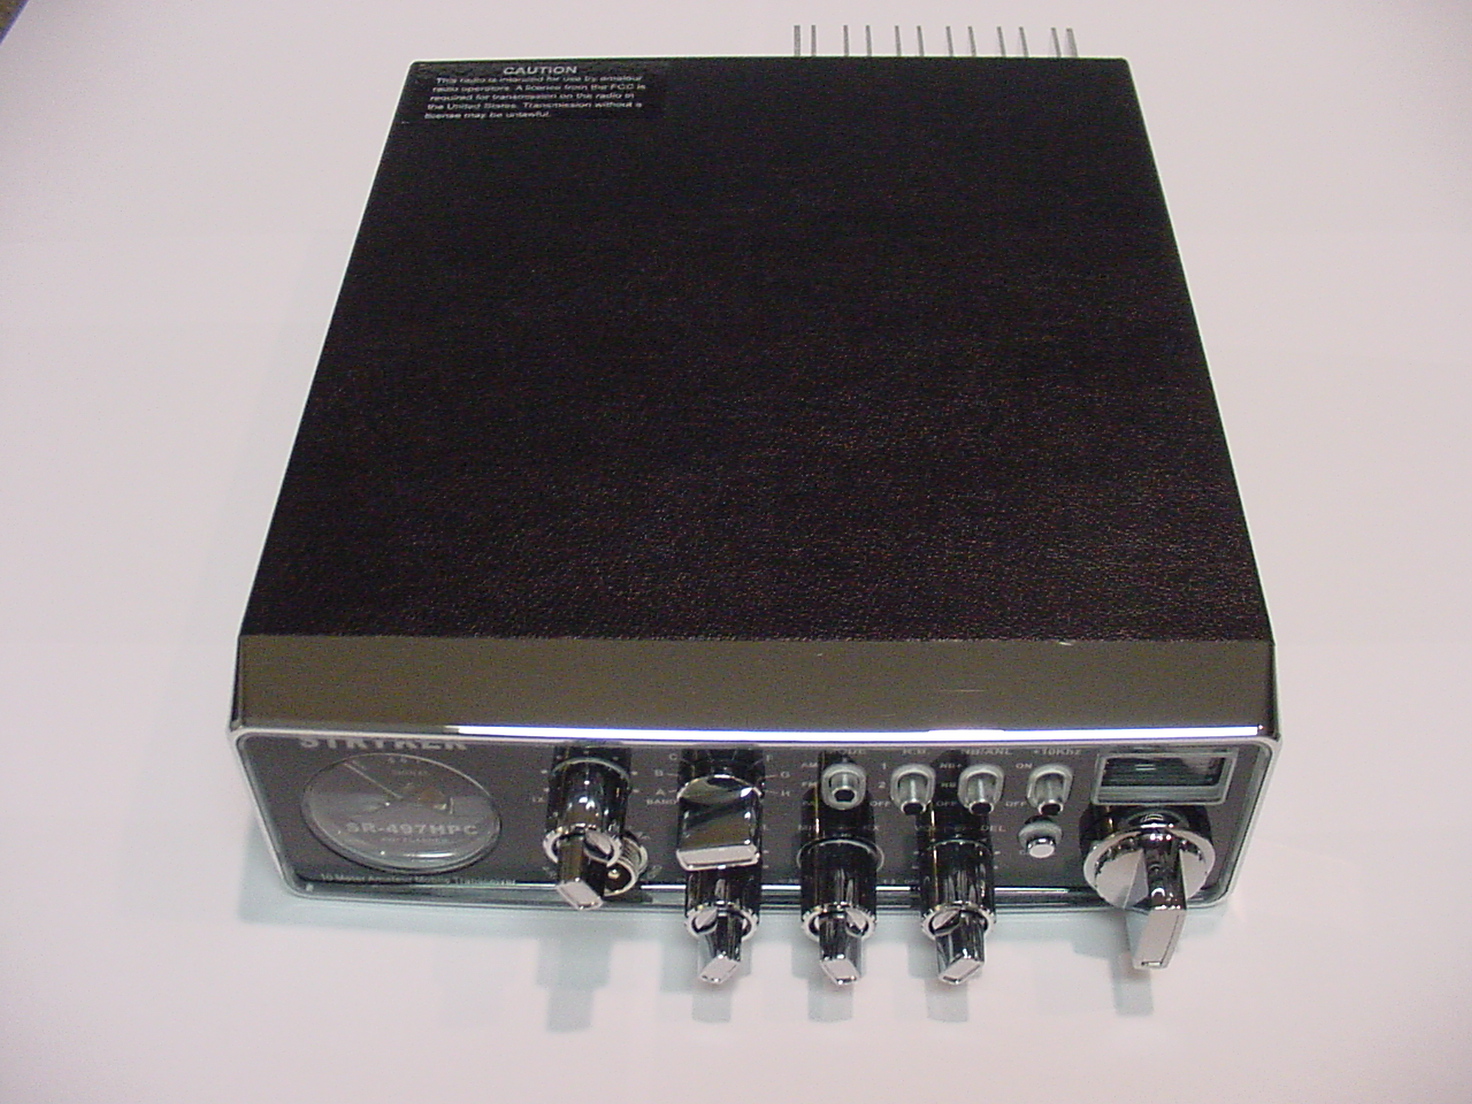 10 Meter Radio SR-497HPC